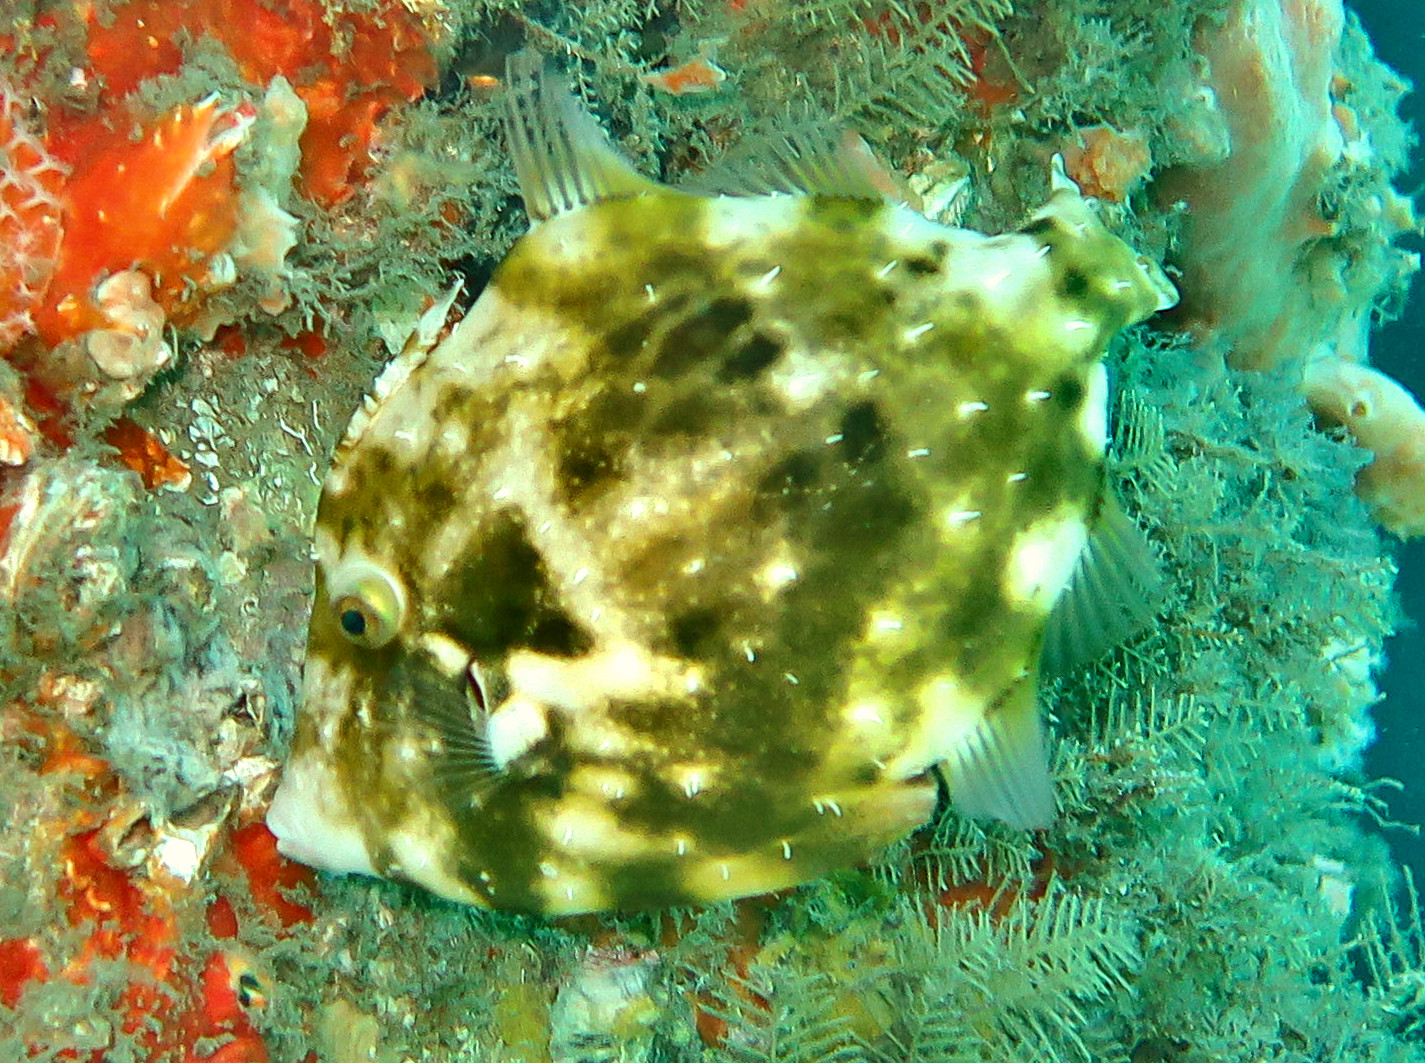 Fringed Filefish - Monacanthus ciliatus